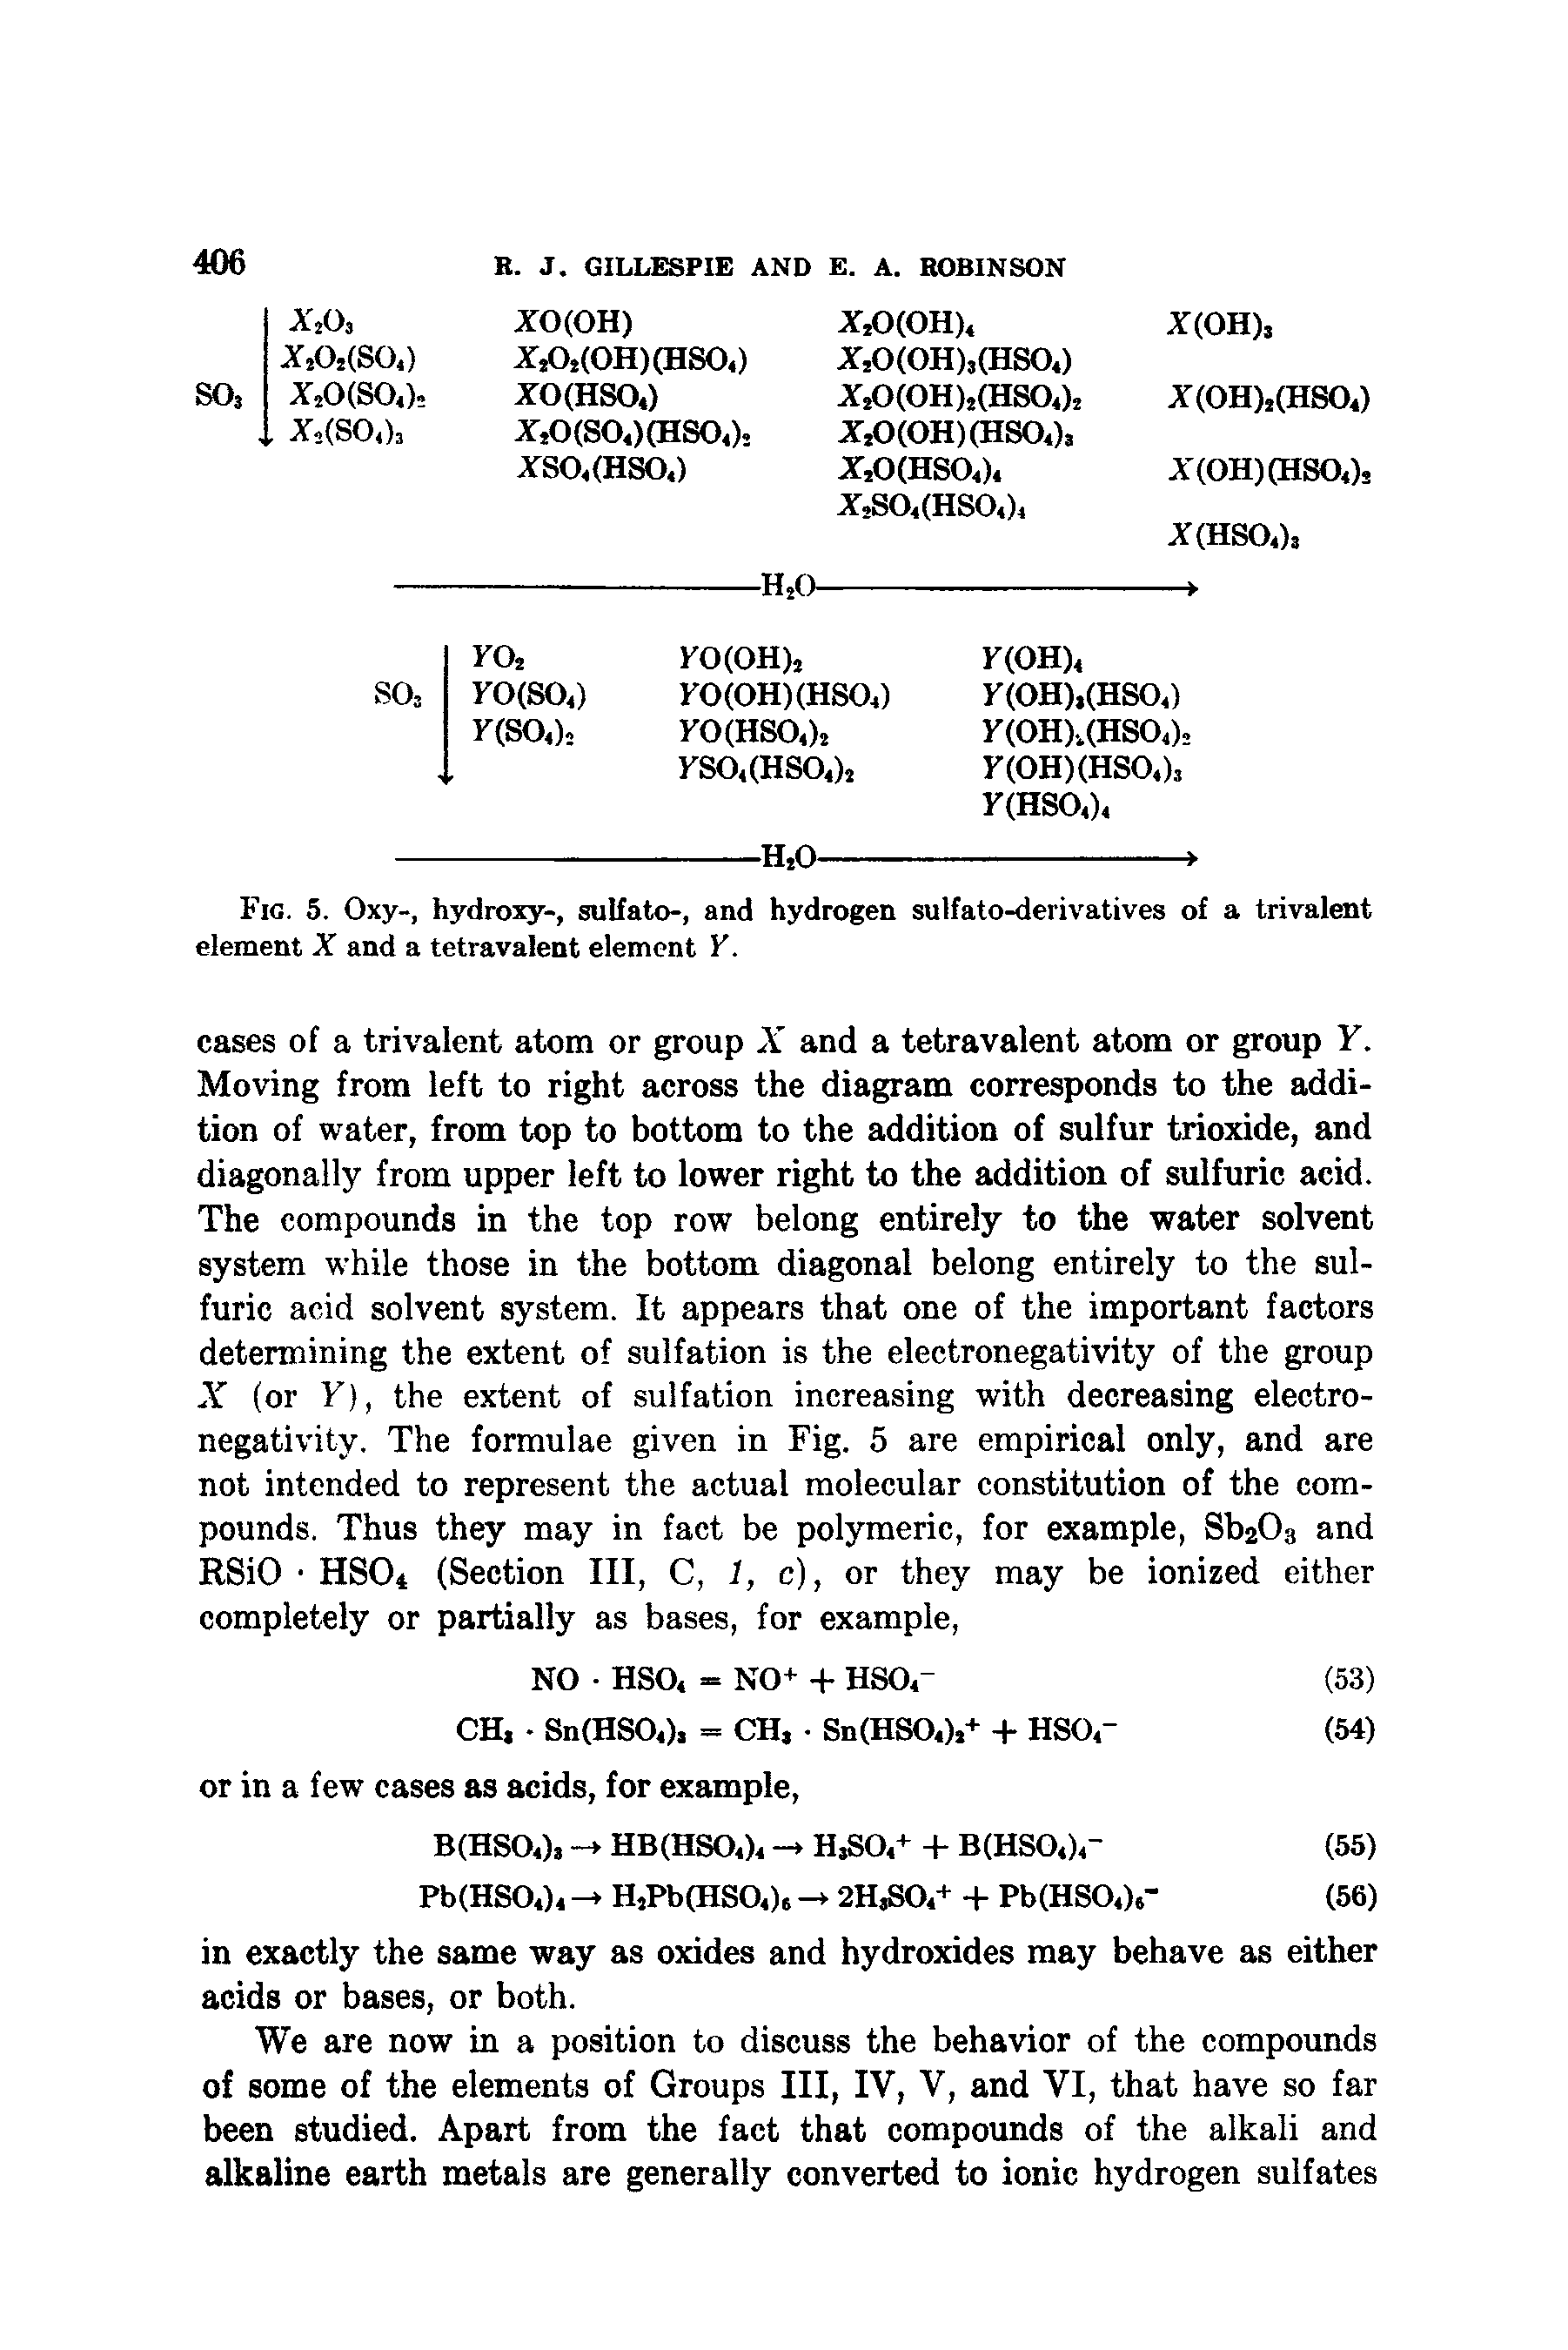 Fig. 5. Oxy-, hydroxy-, sulfato-, and hydrogen sulfato-derivatives of a trivalent element X and a tetravalent element F.